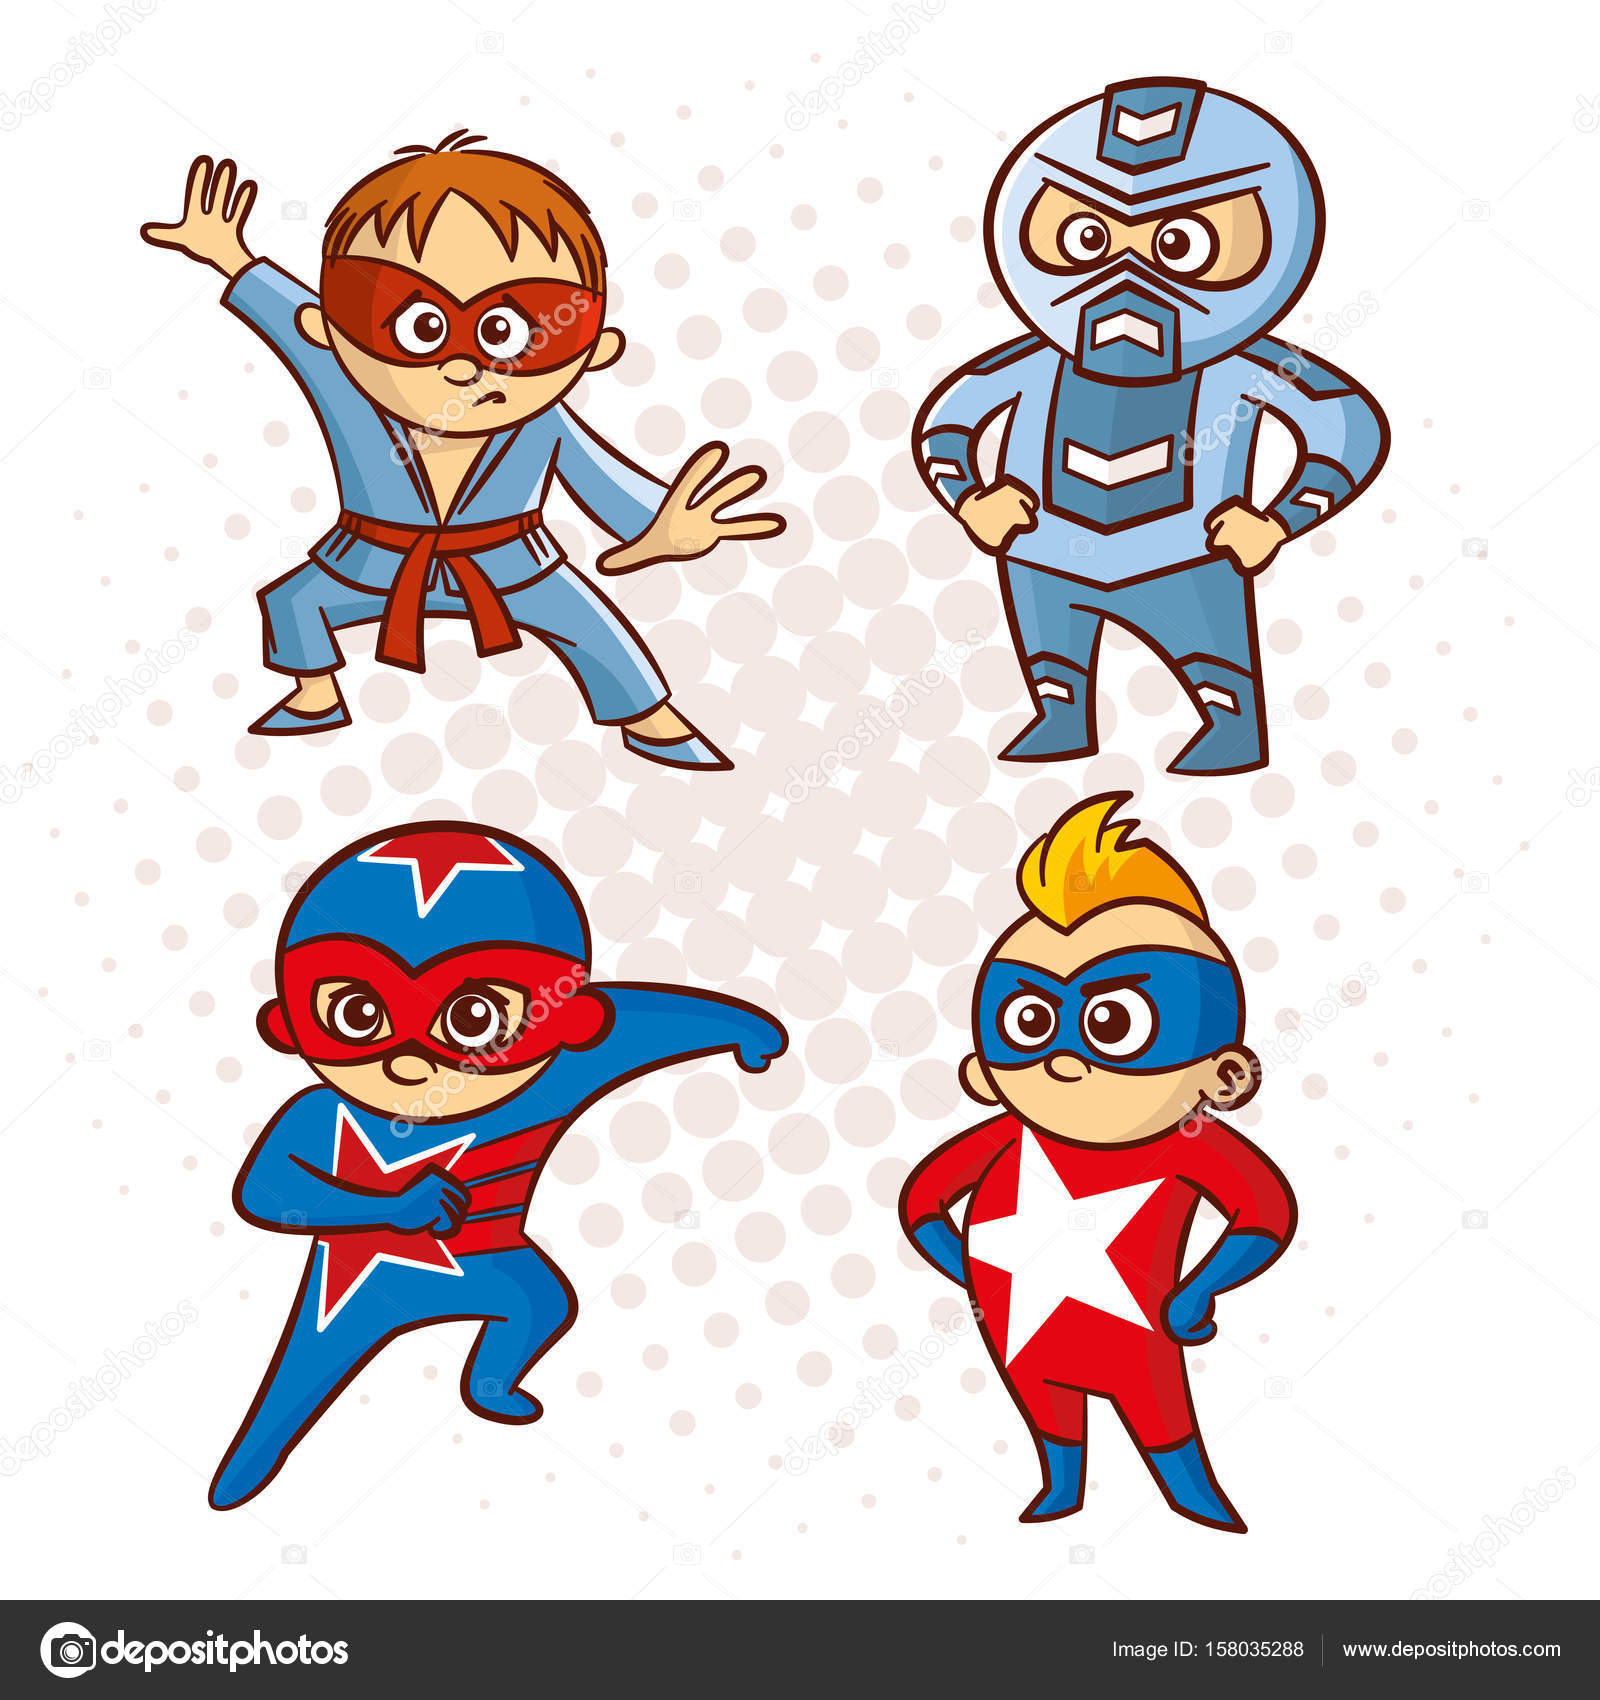 Sticker kids Vectors & Illustrations for Free Download